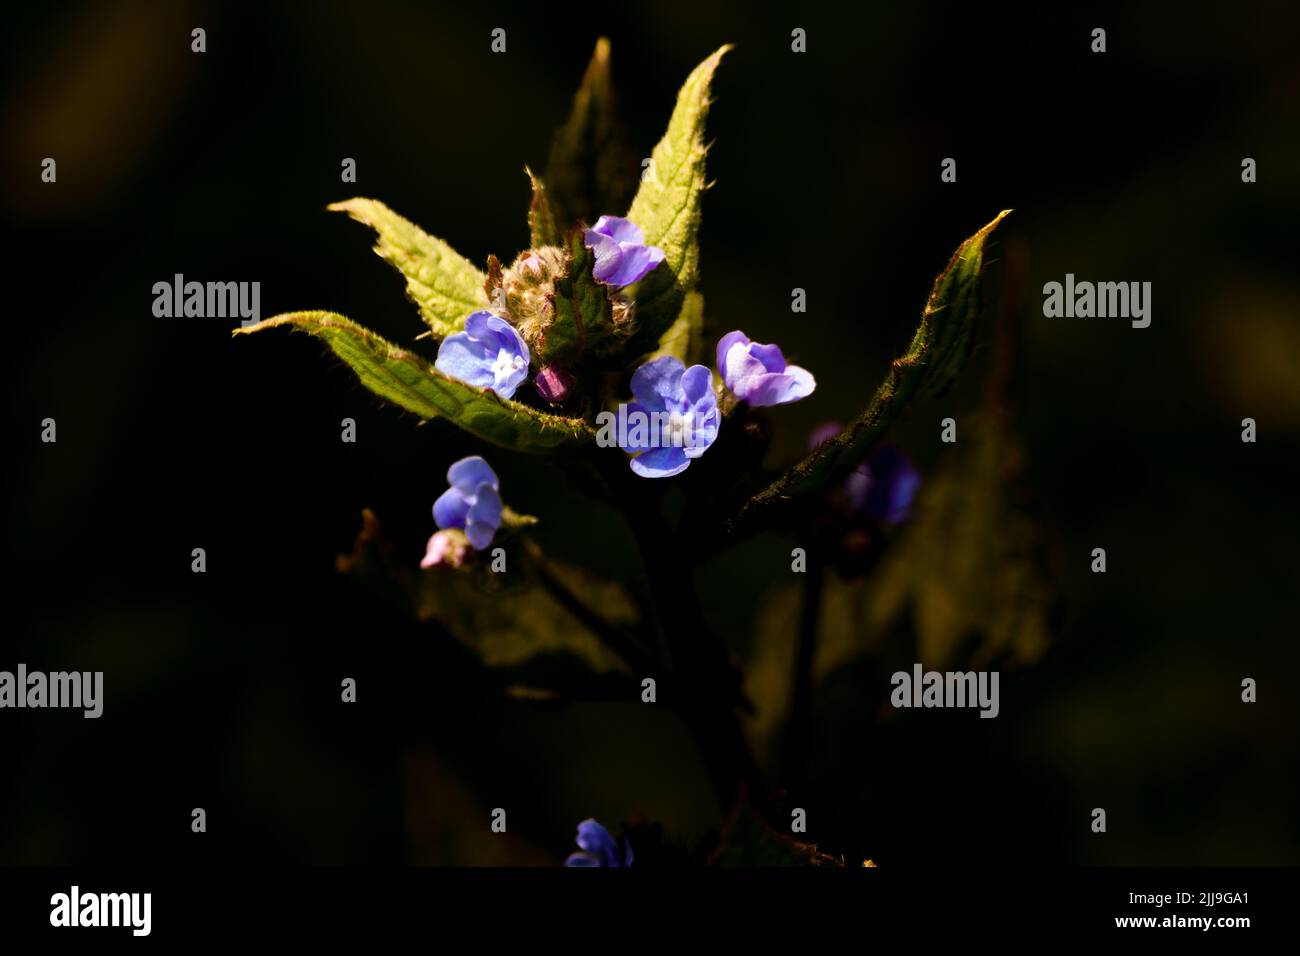 A closeup shot of blooming pentaglottis flowers in the dark Stock Photo